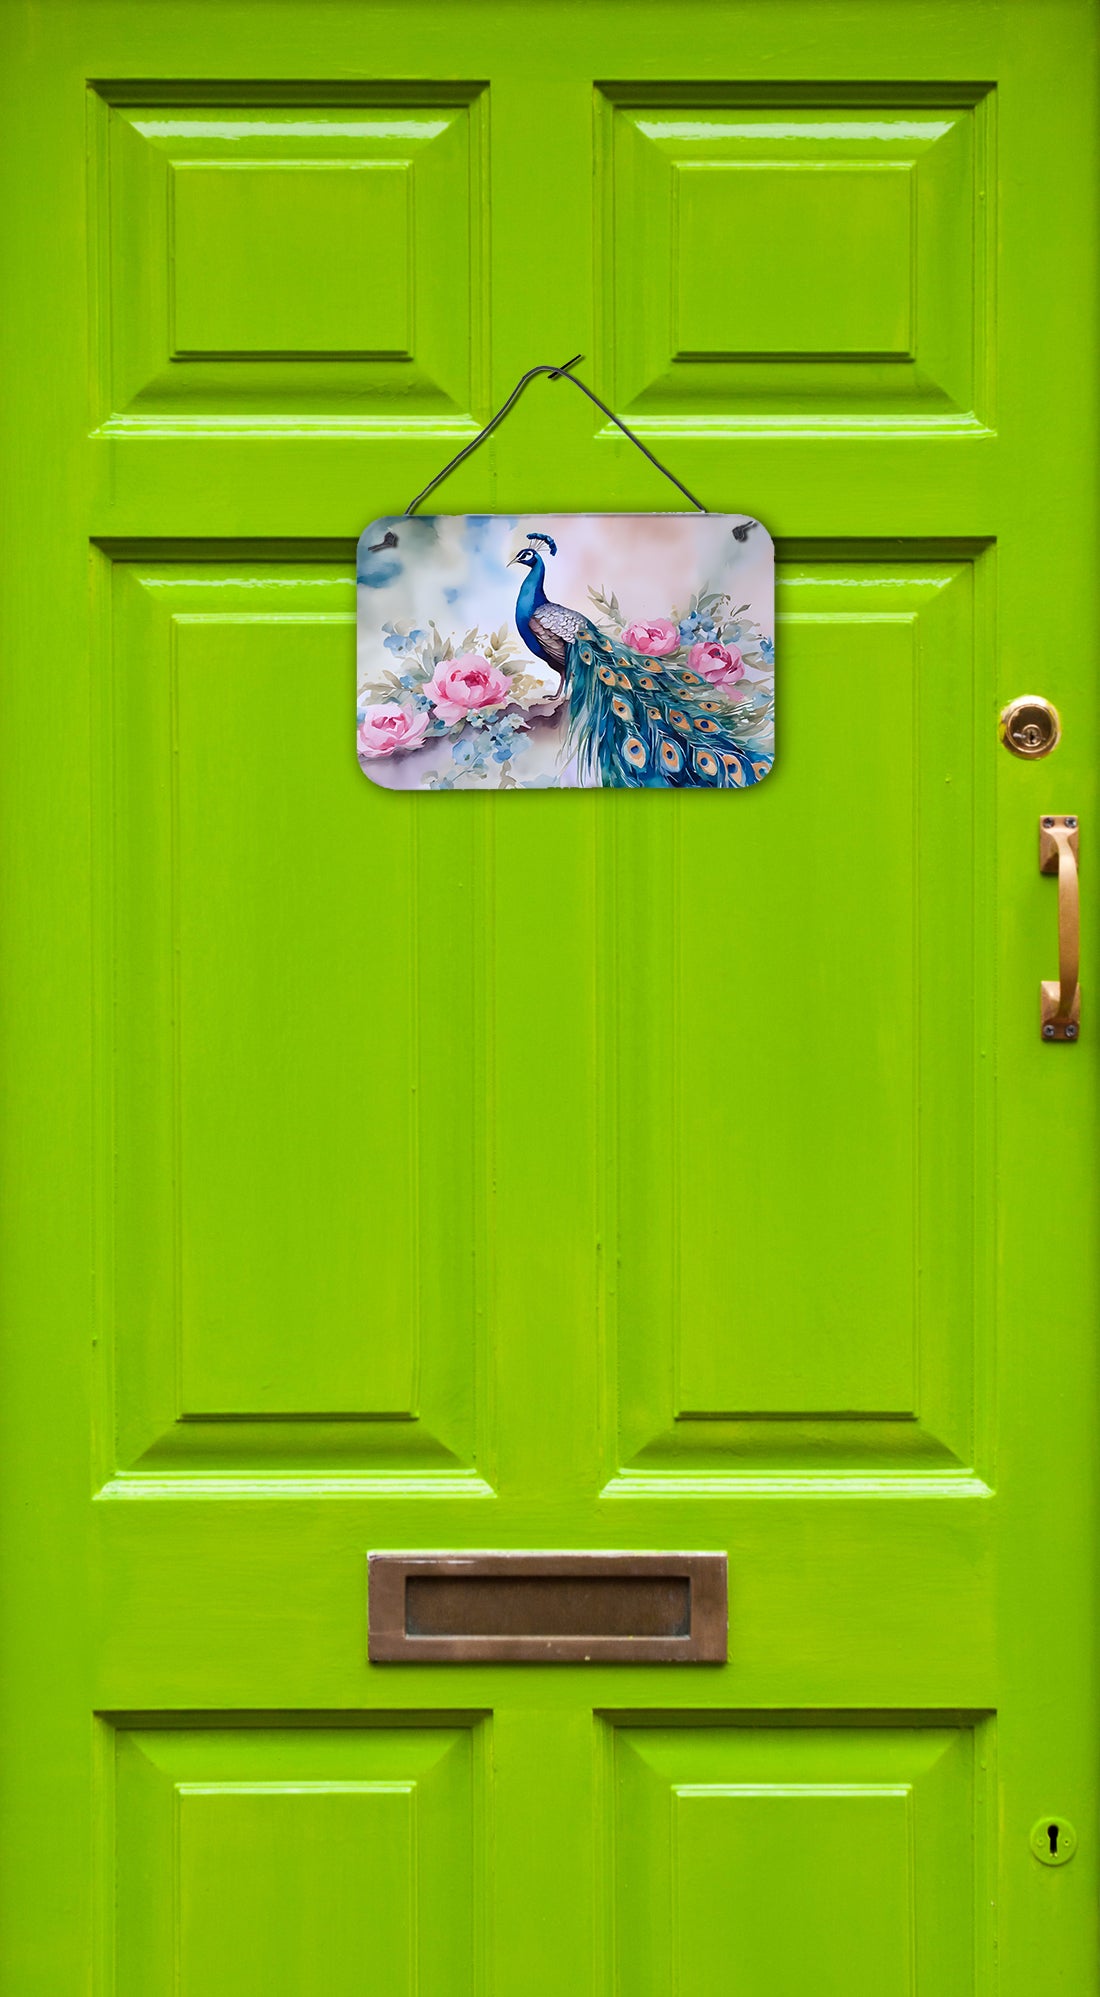 Buy this Peacock Wall or Door Hanging Prints